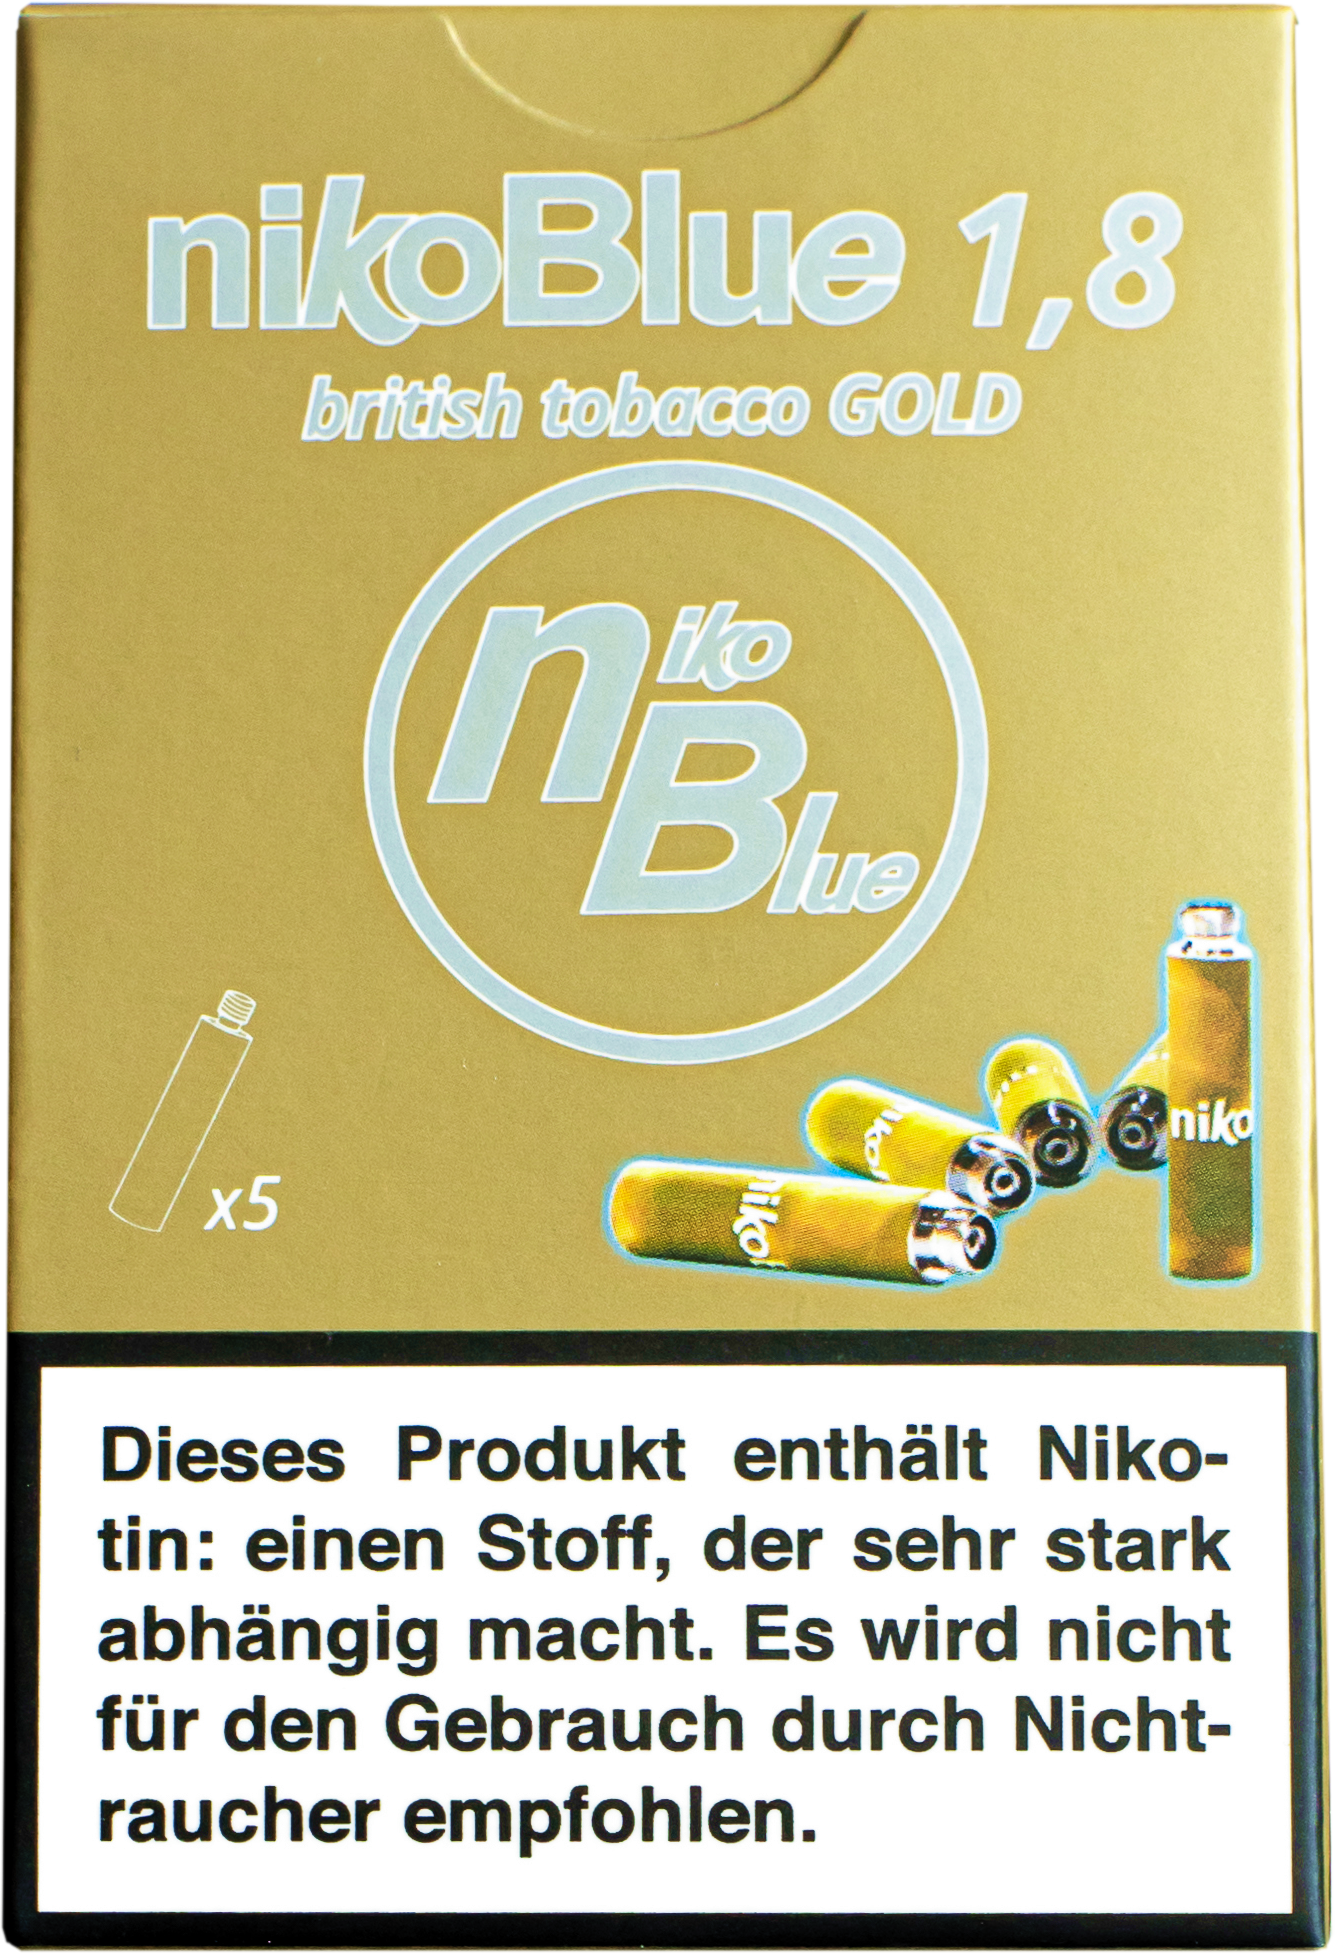 nikoBlue refill gold 1.8% Nikotin